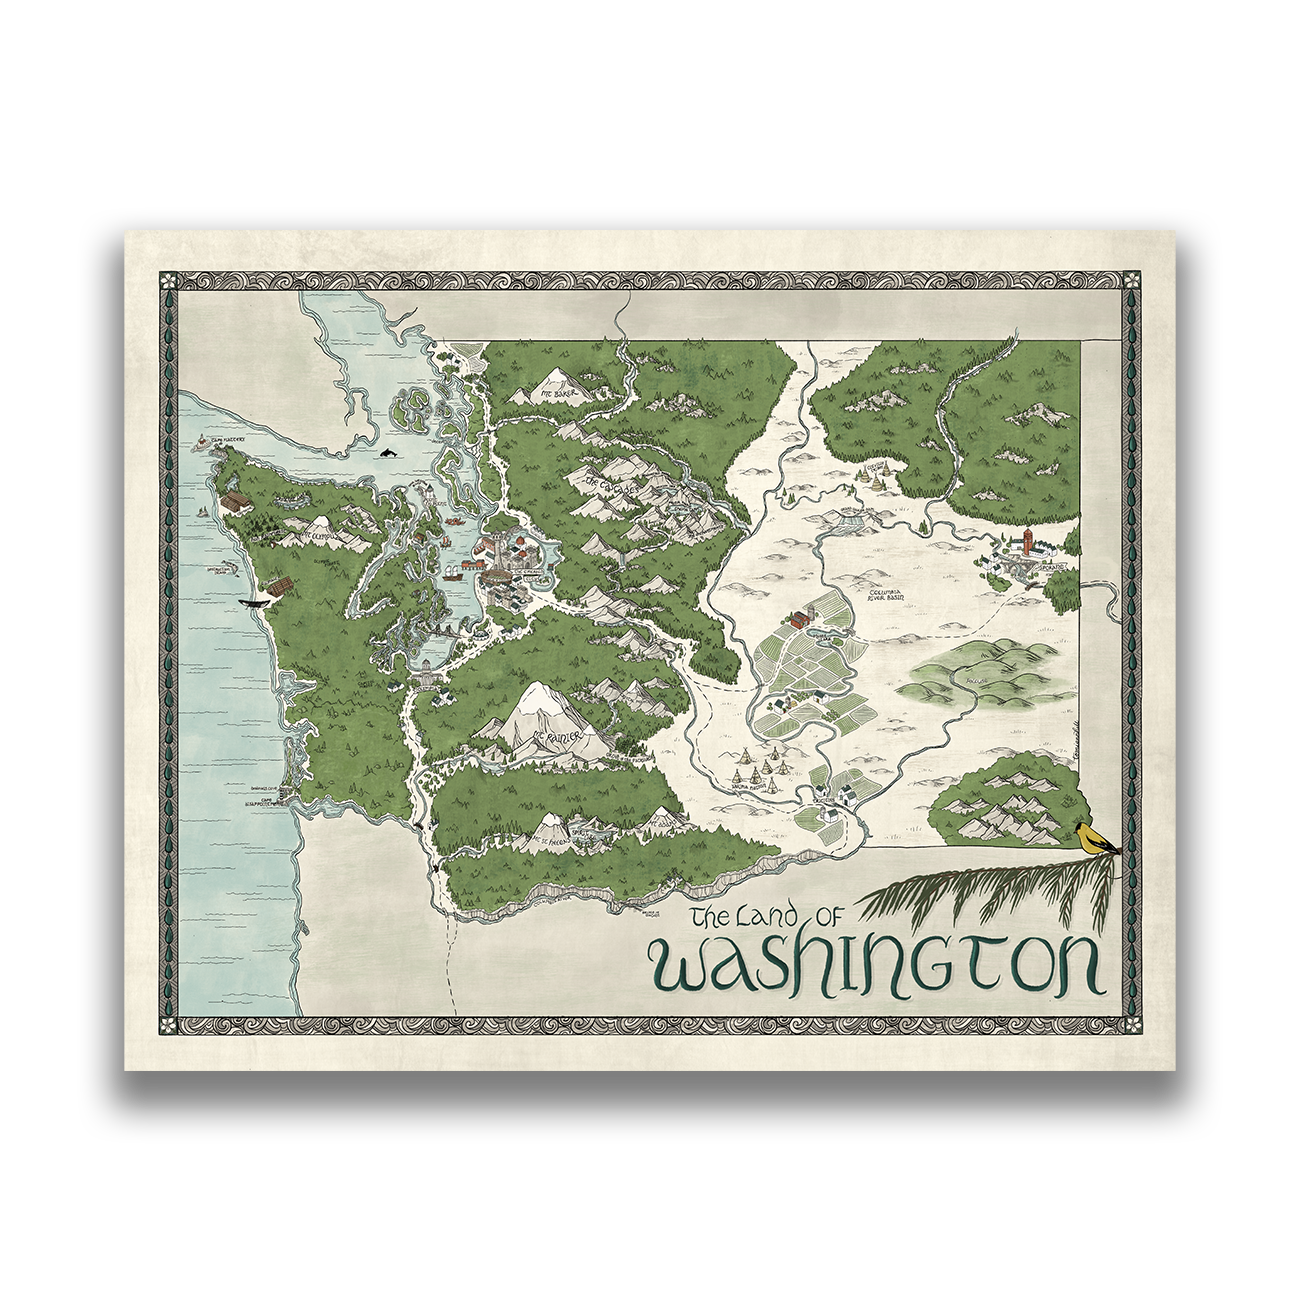 Washington Map - Hand-drawn fantasy map of Washington